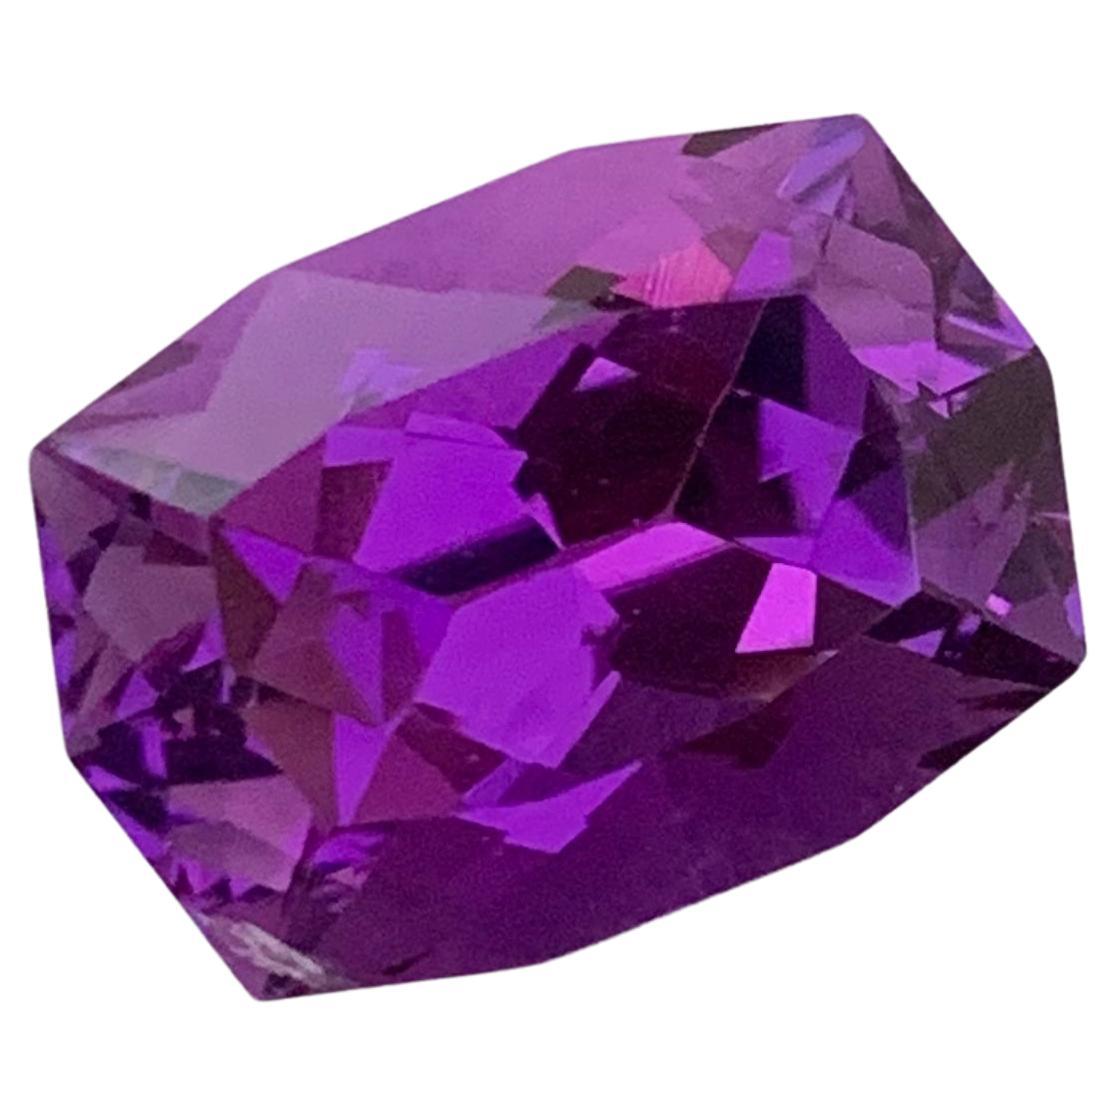 Stunning 7.85 Carats Loose Dark Purple Amethyst Ring Gem from Brazil Mine For Sale